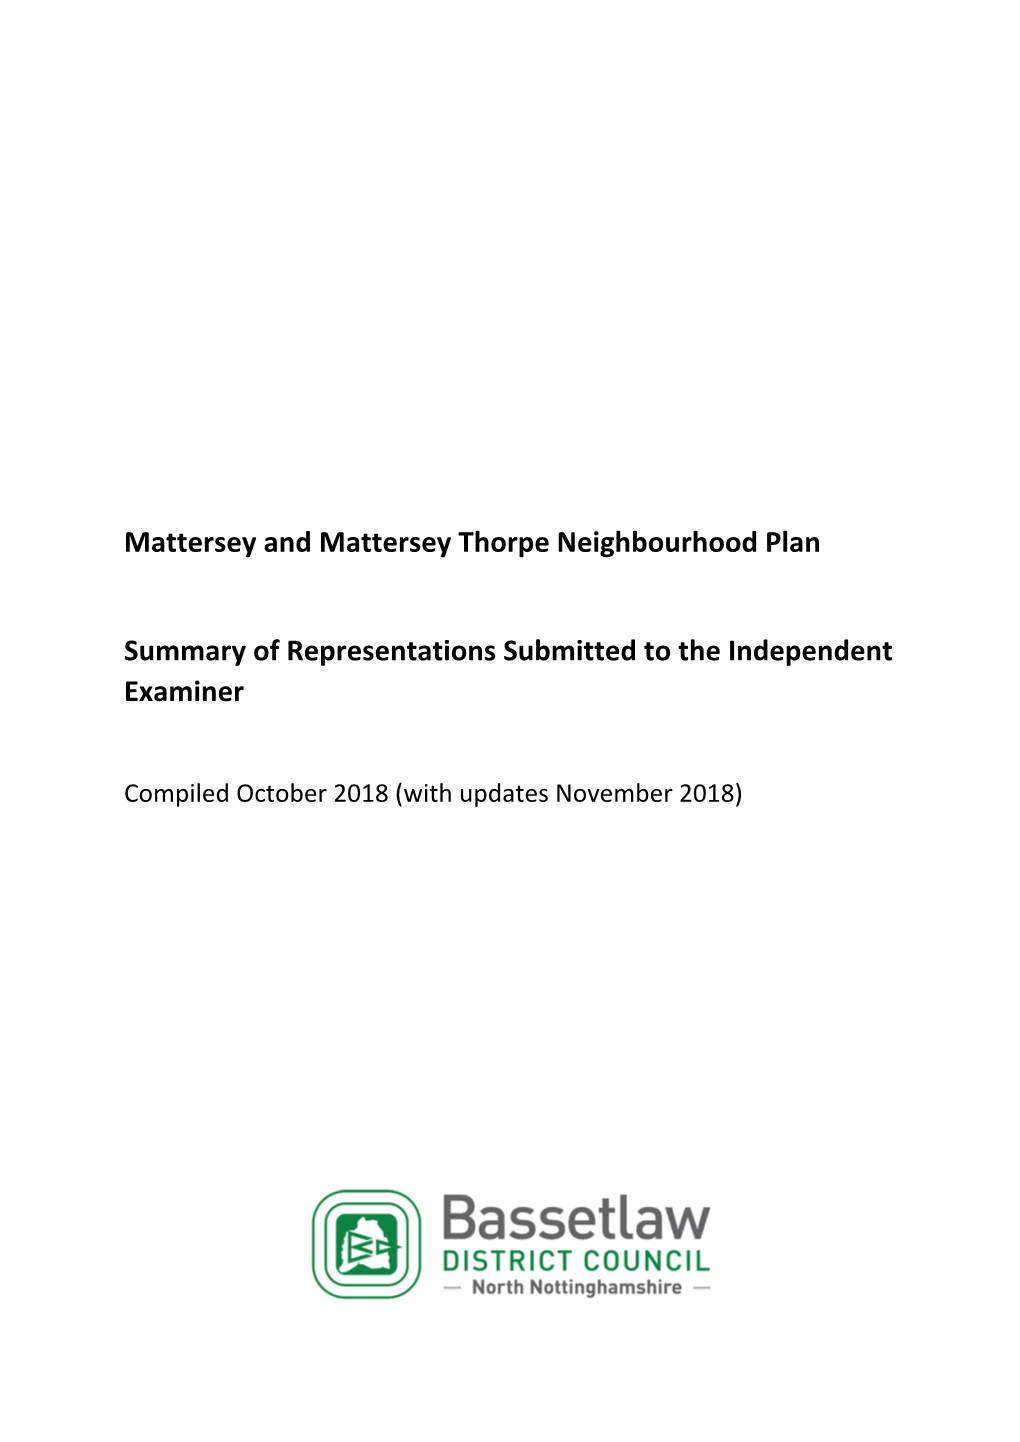 Mattersey and Mattersey Thorpe Neighbourhood Plan Summary Of